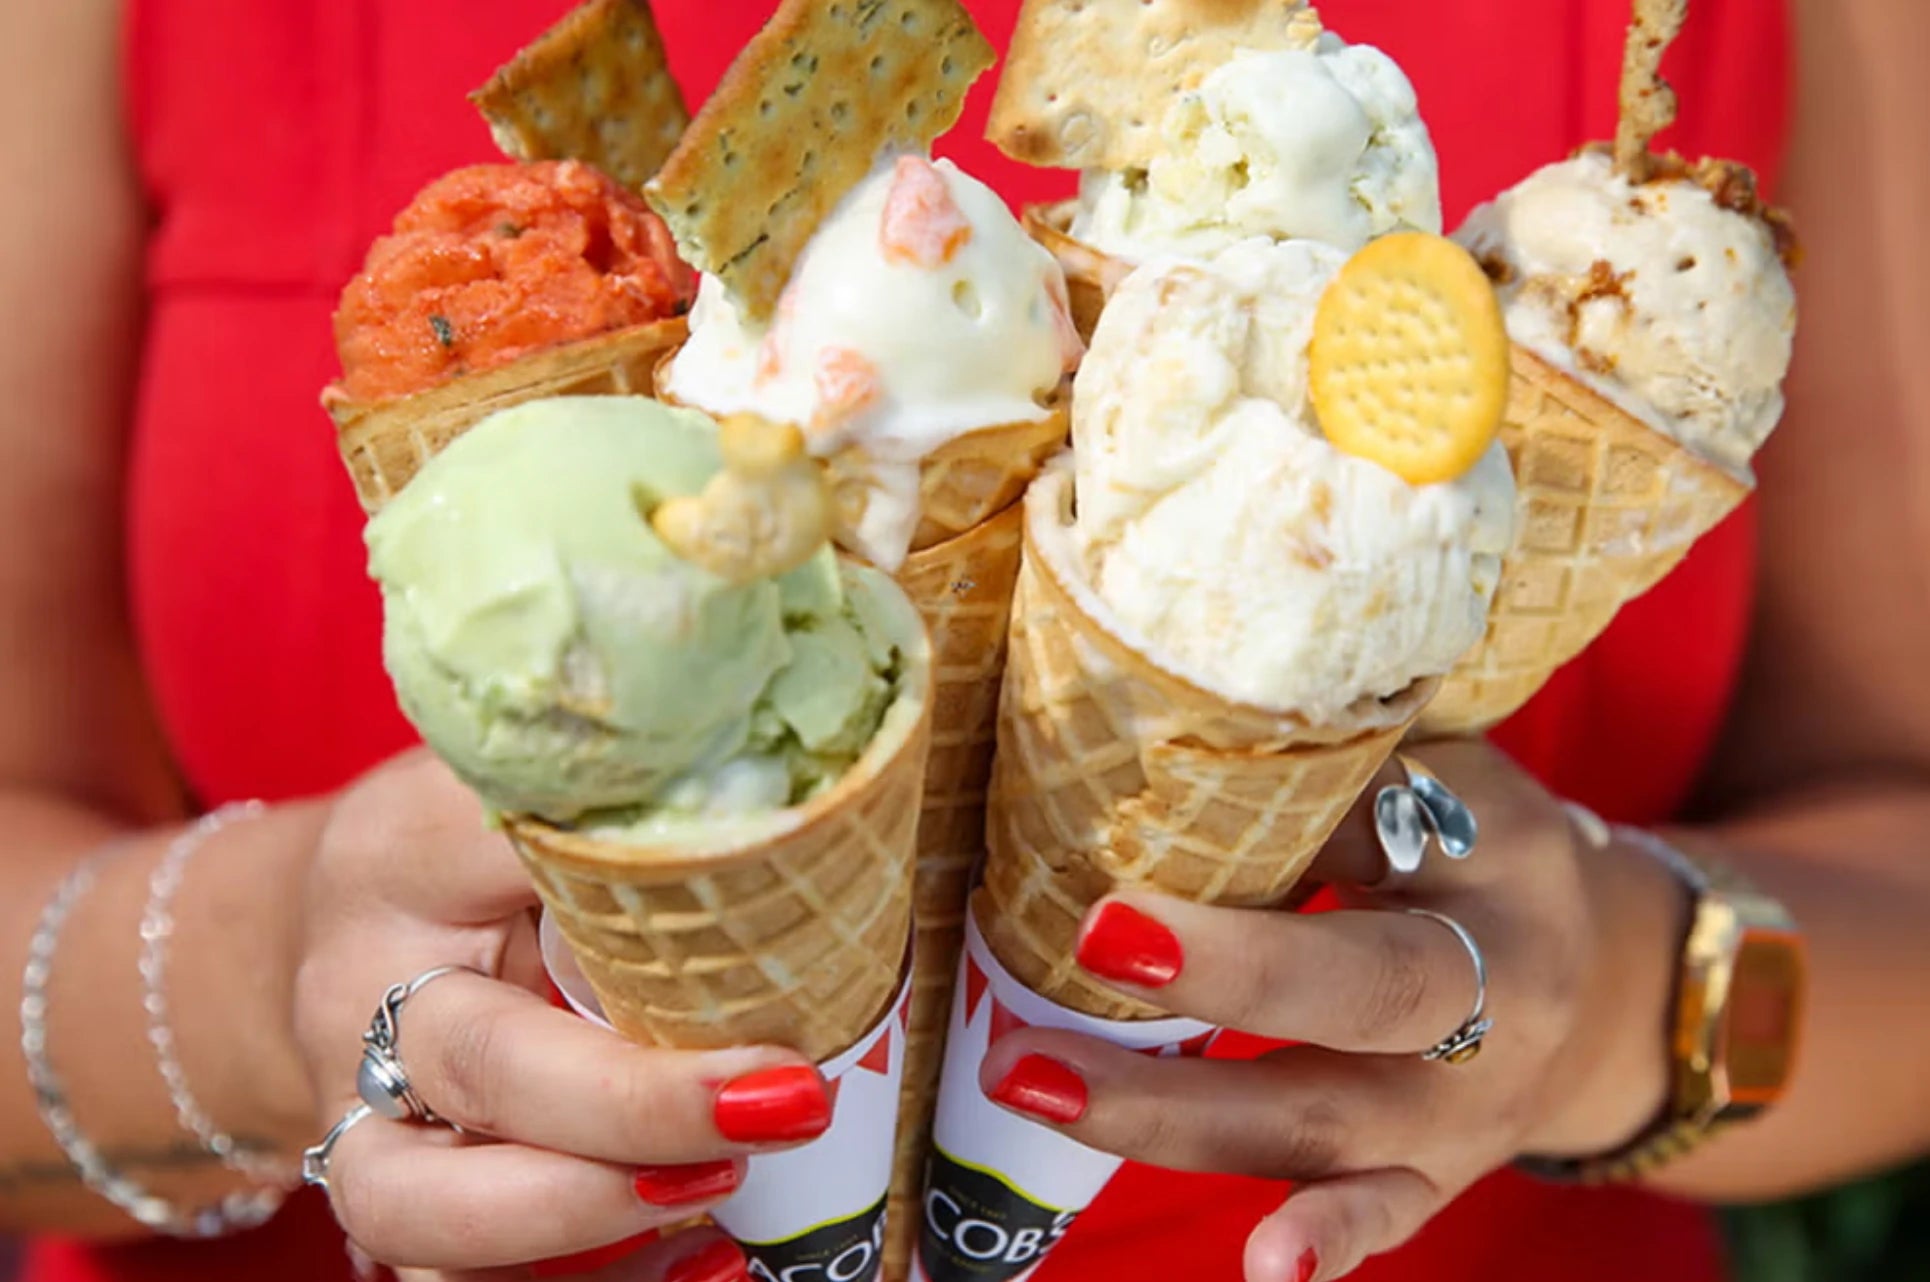 Ice cream cones with bespoke Jacob's flavours